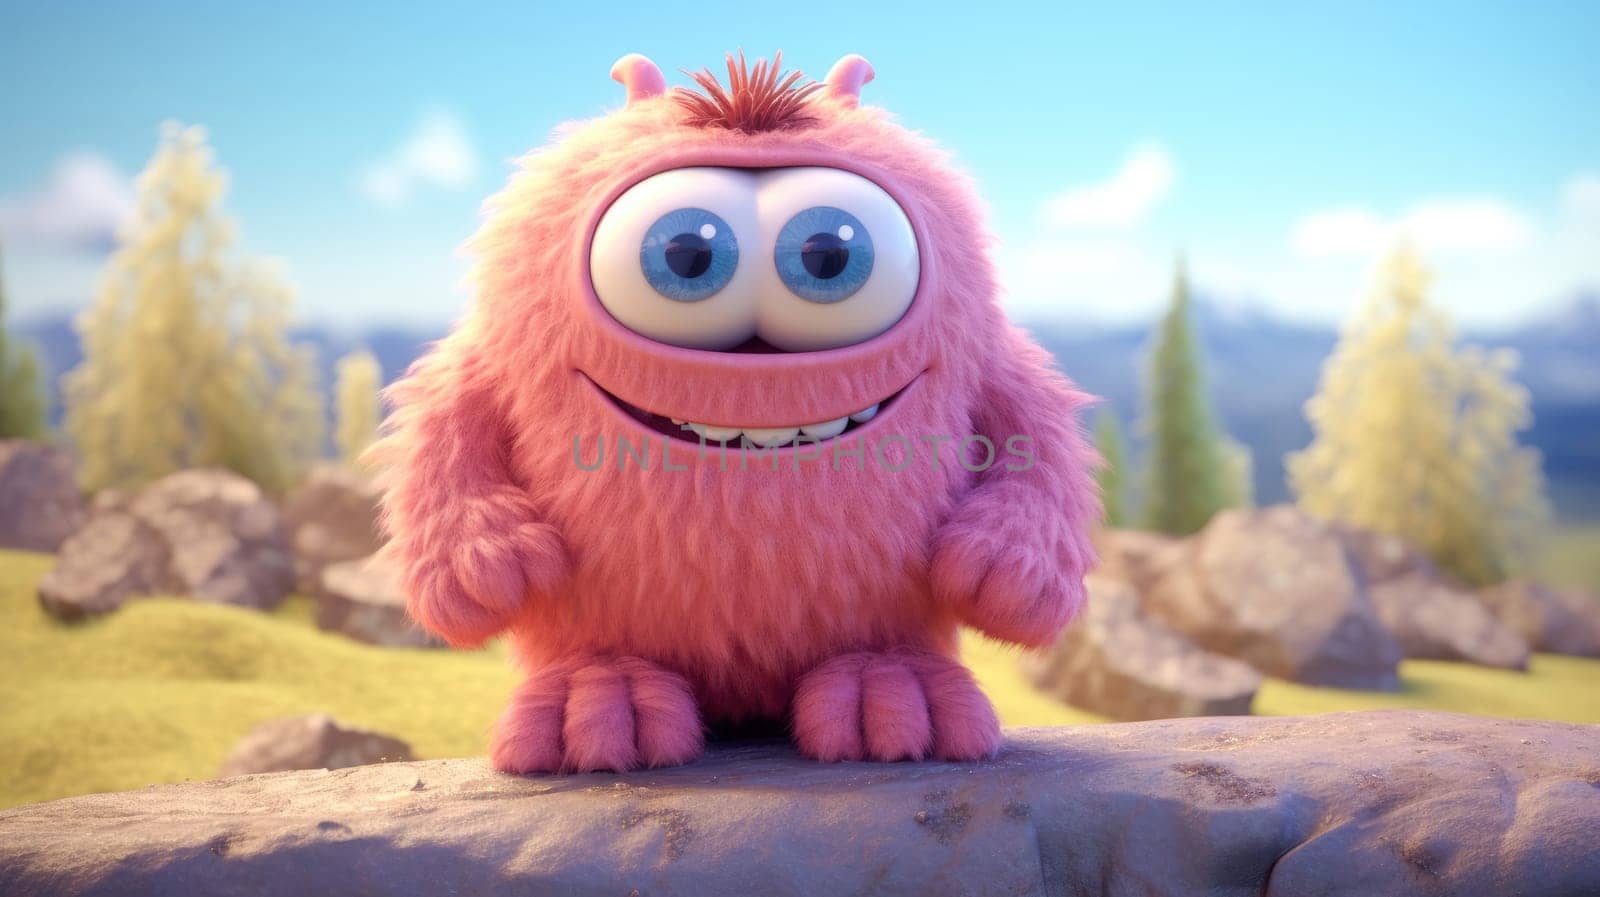 Cute Furry fluffy pink Monster, cartoon 3d, alien monster illustration, on spring background